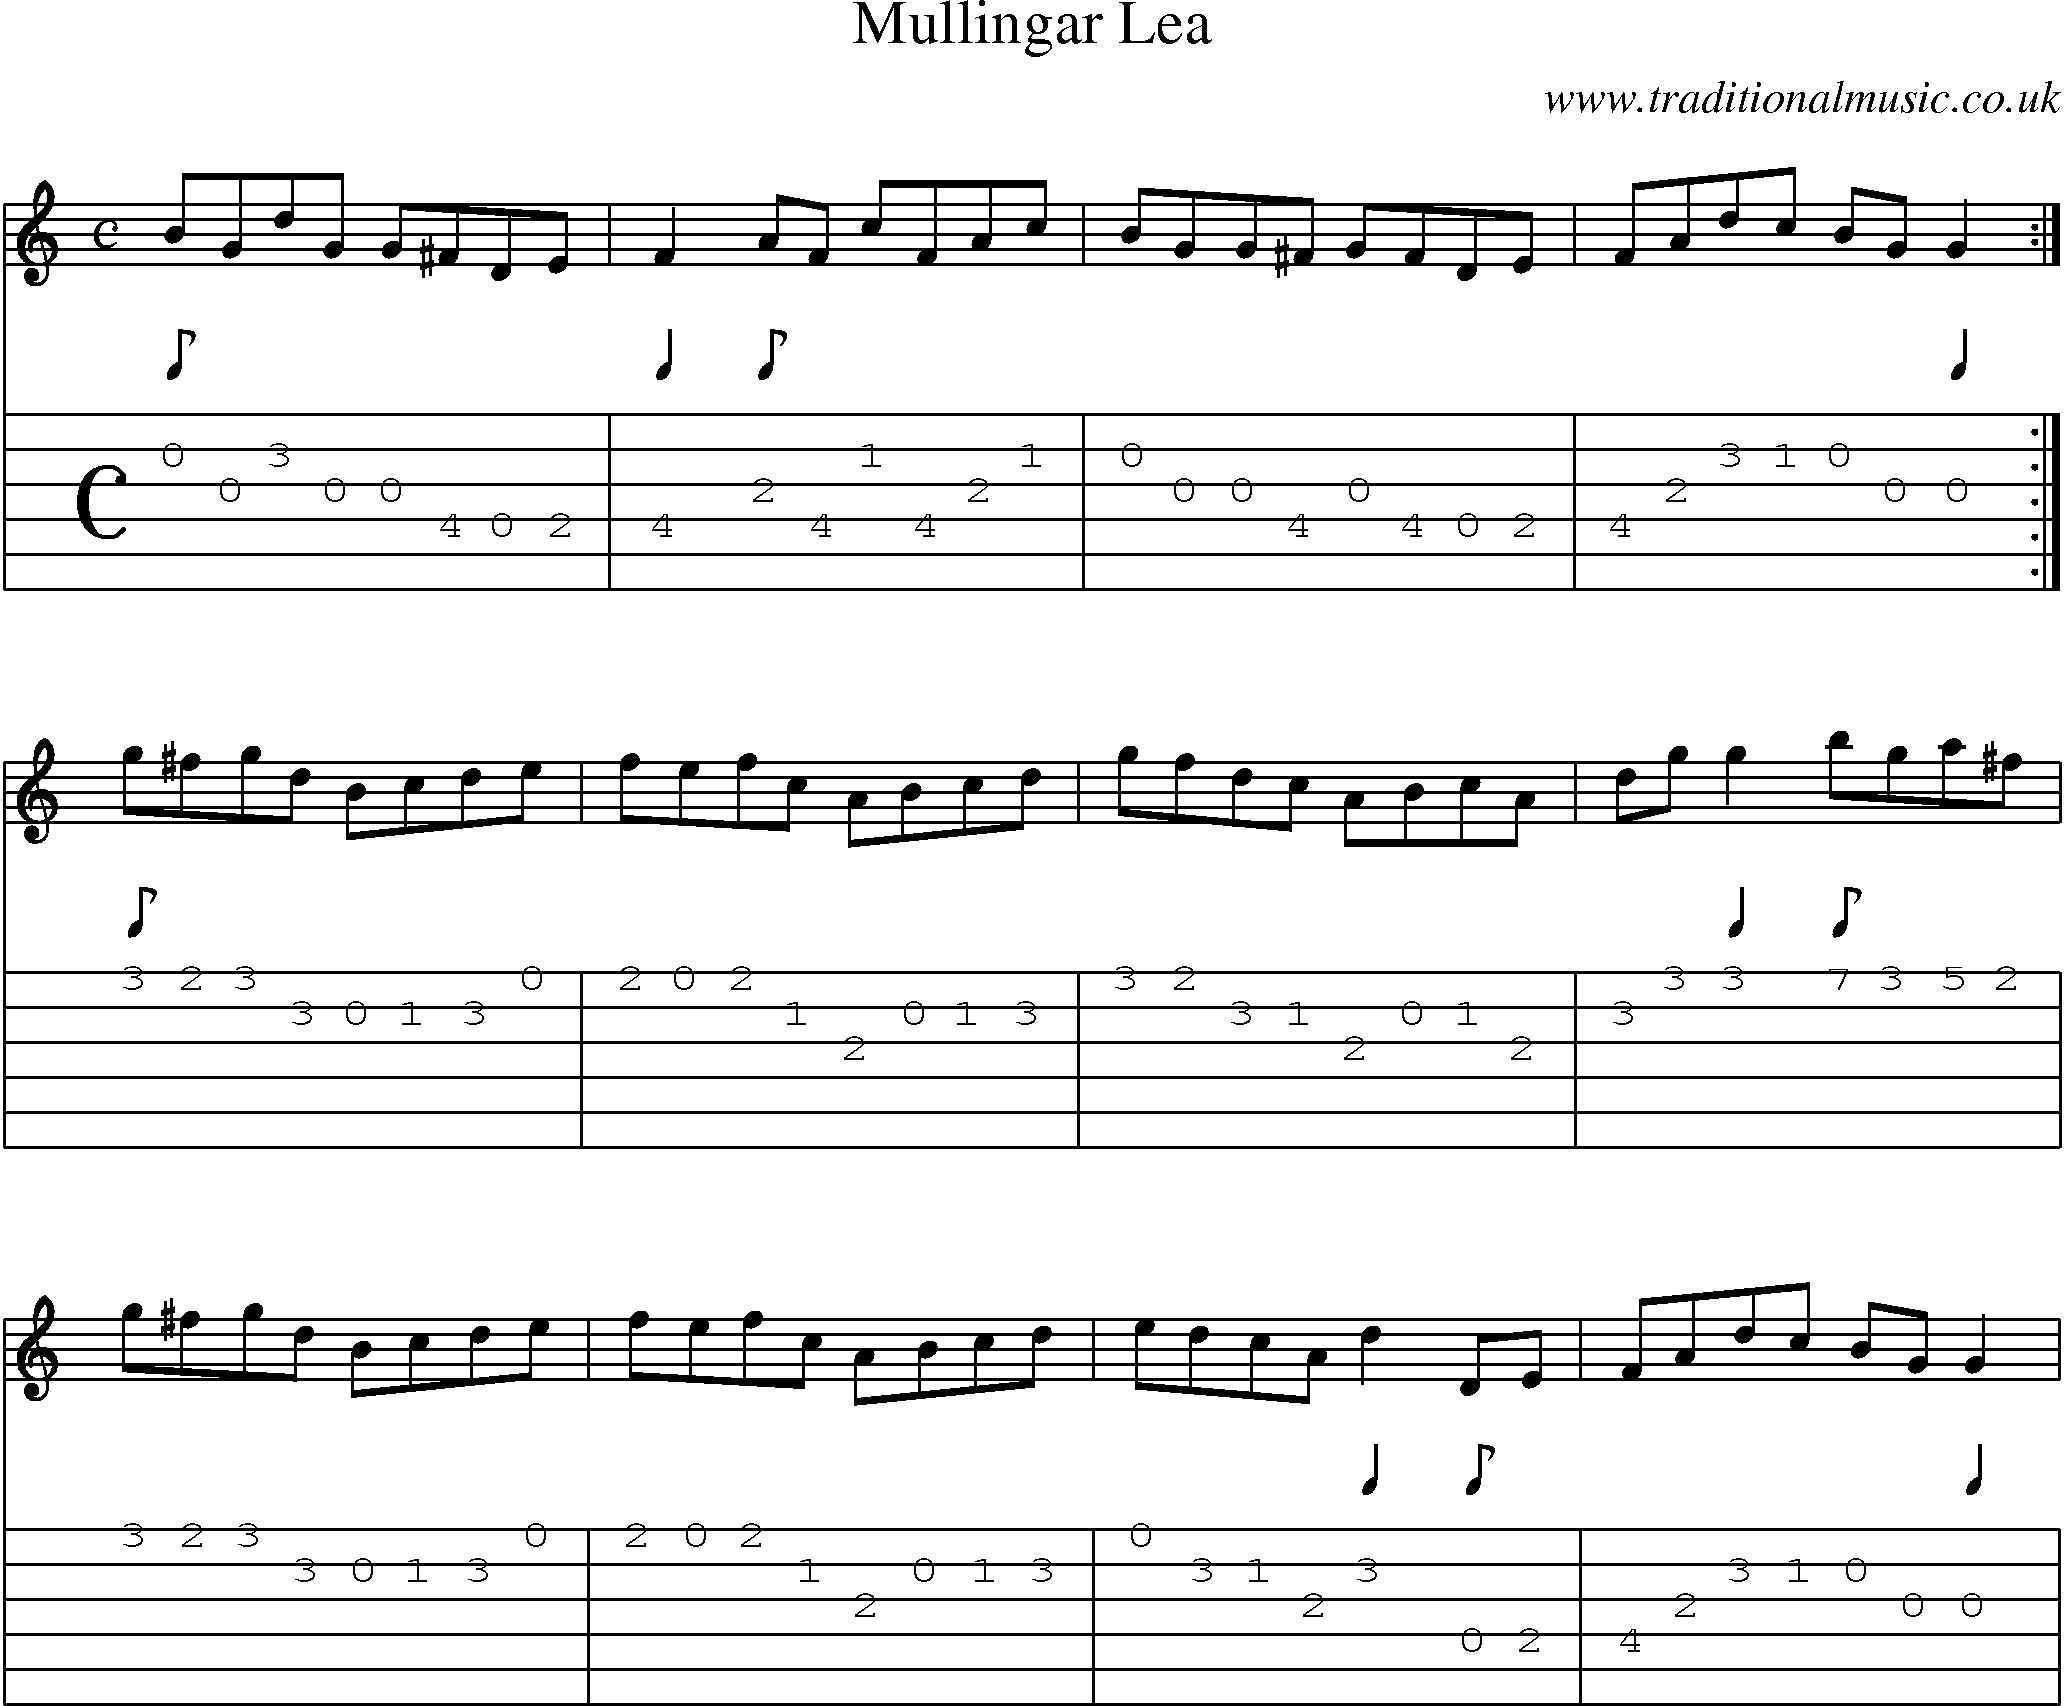 Music Score and Guitar Tabs for Mullingar Lea